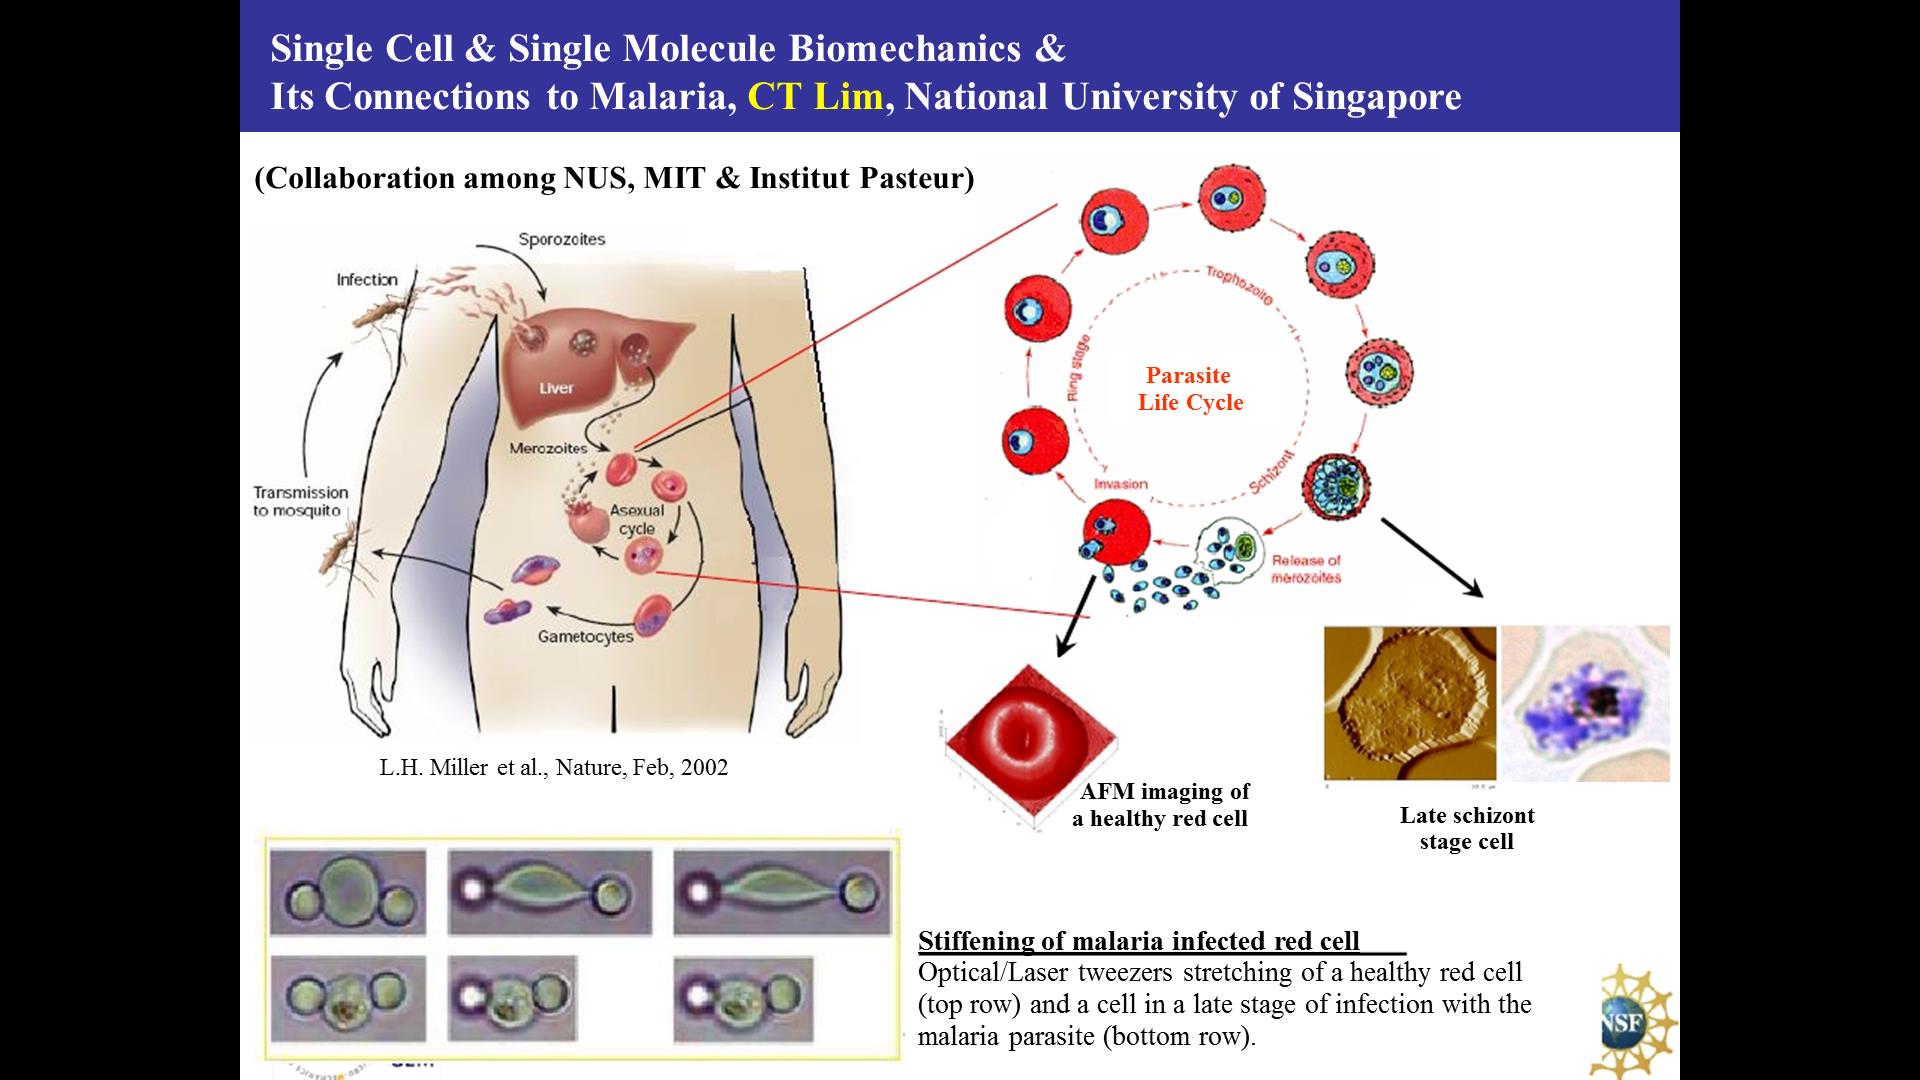 Single Cell & Single Molecule Biomechanics & Its Connections to Malaria